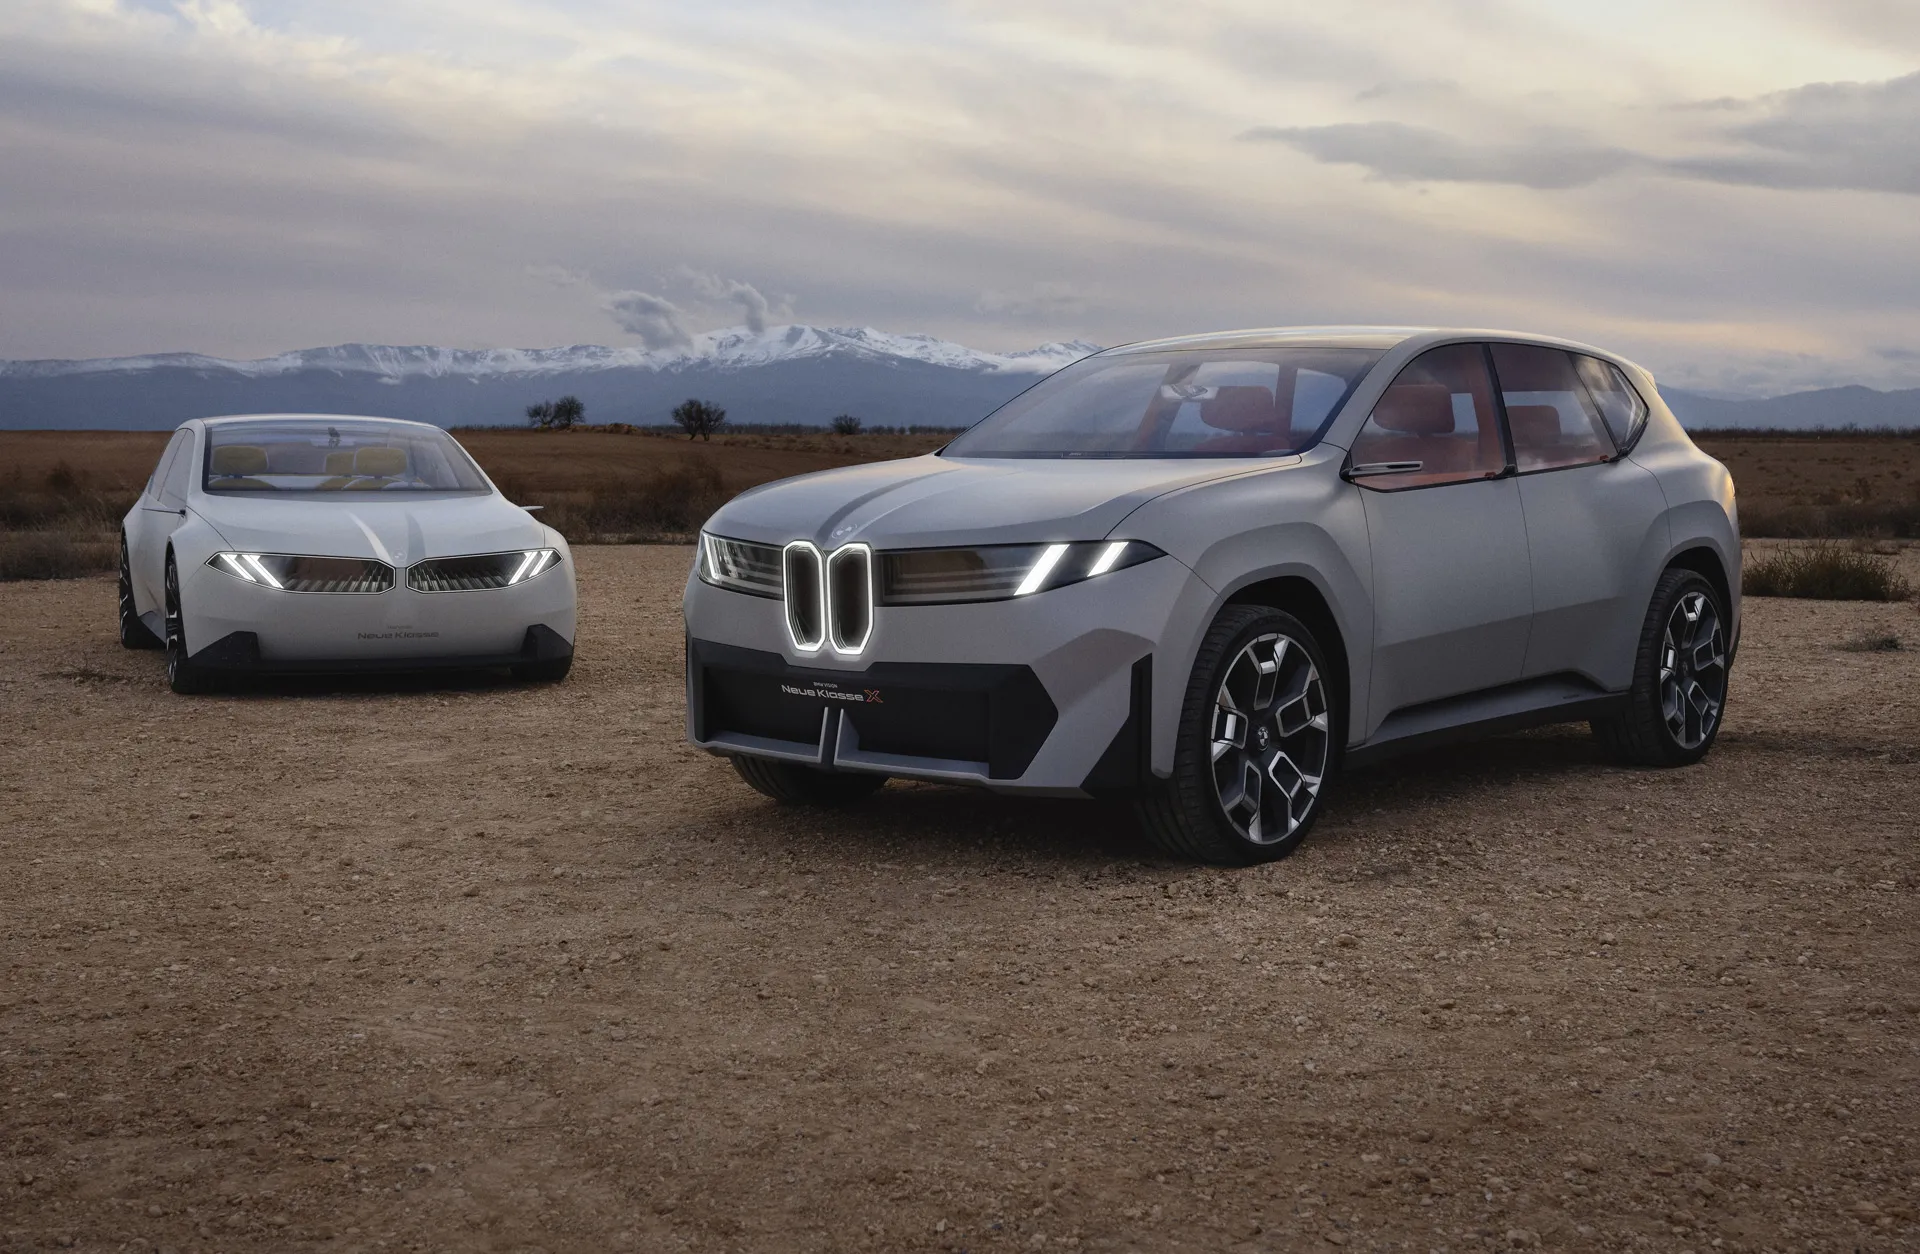 BMW taps Rimac for EV batteries